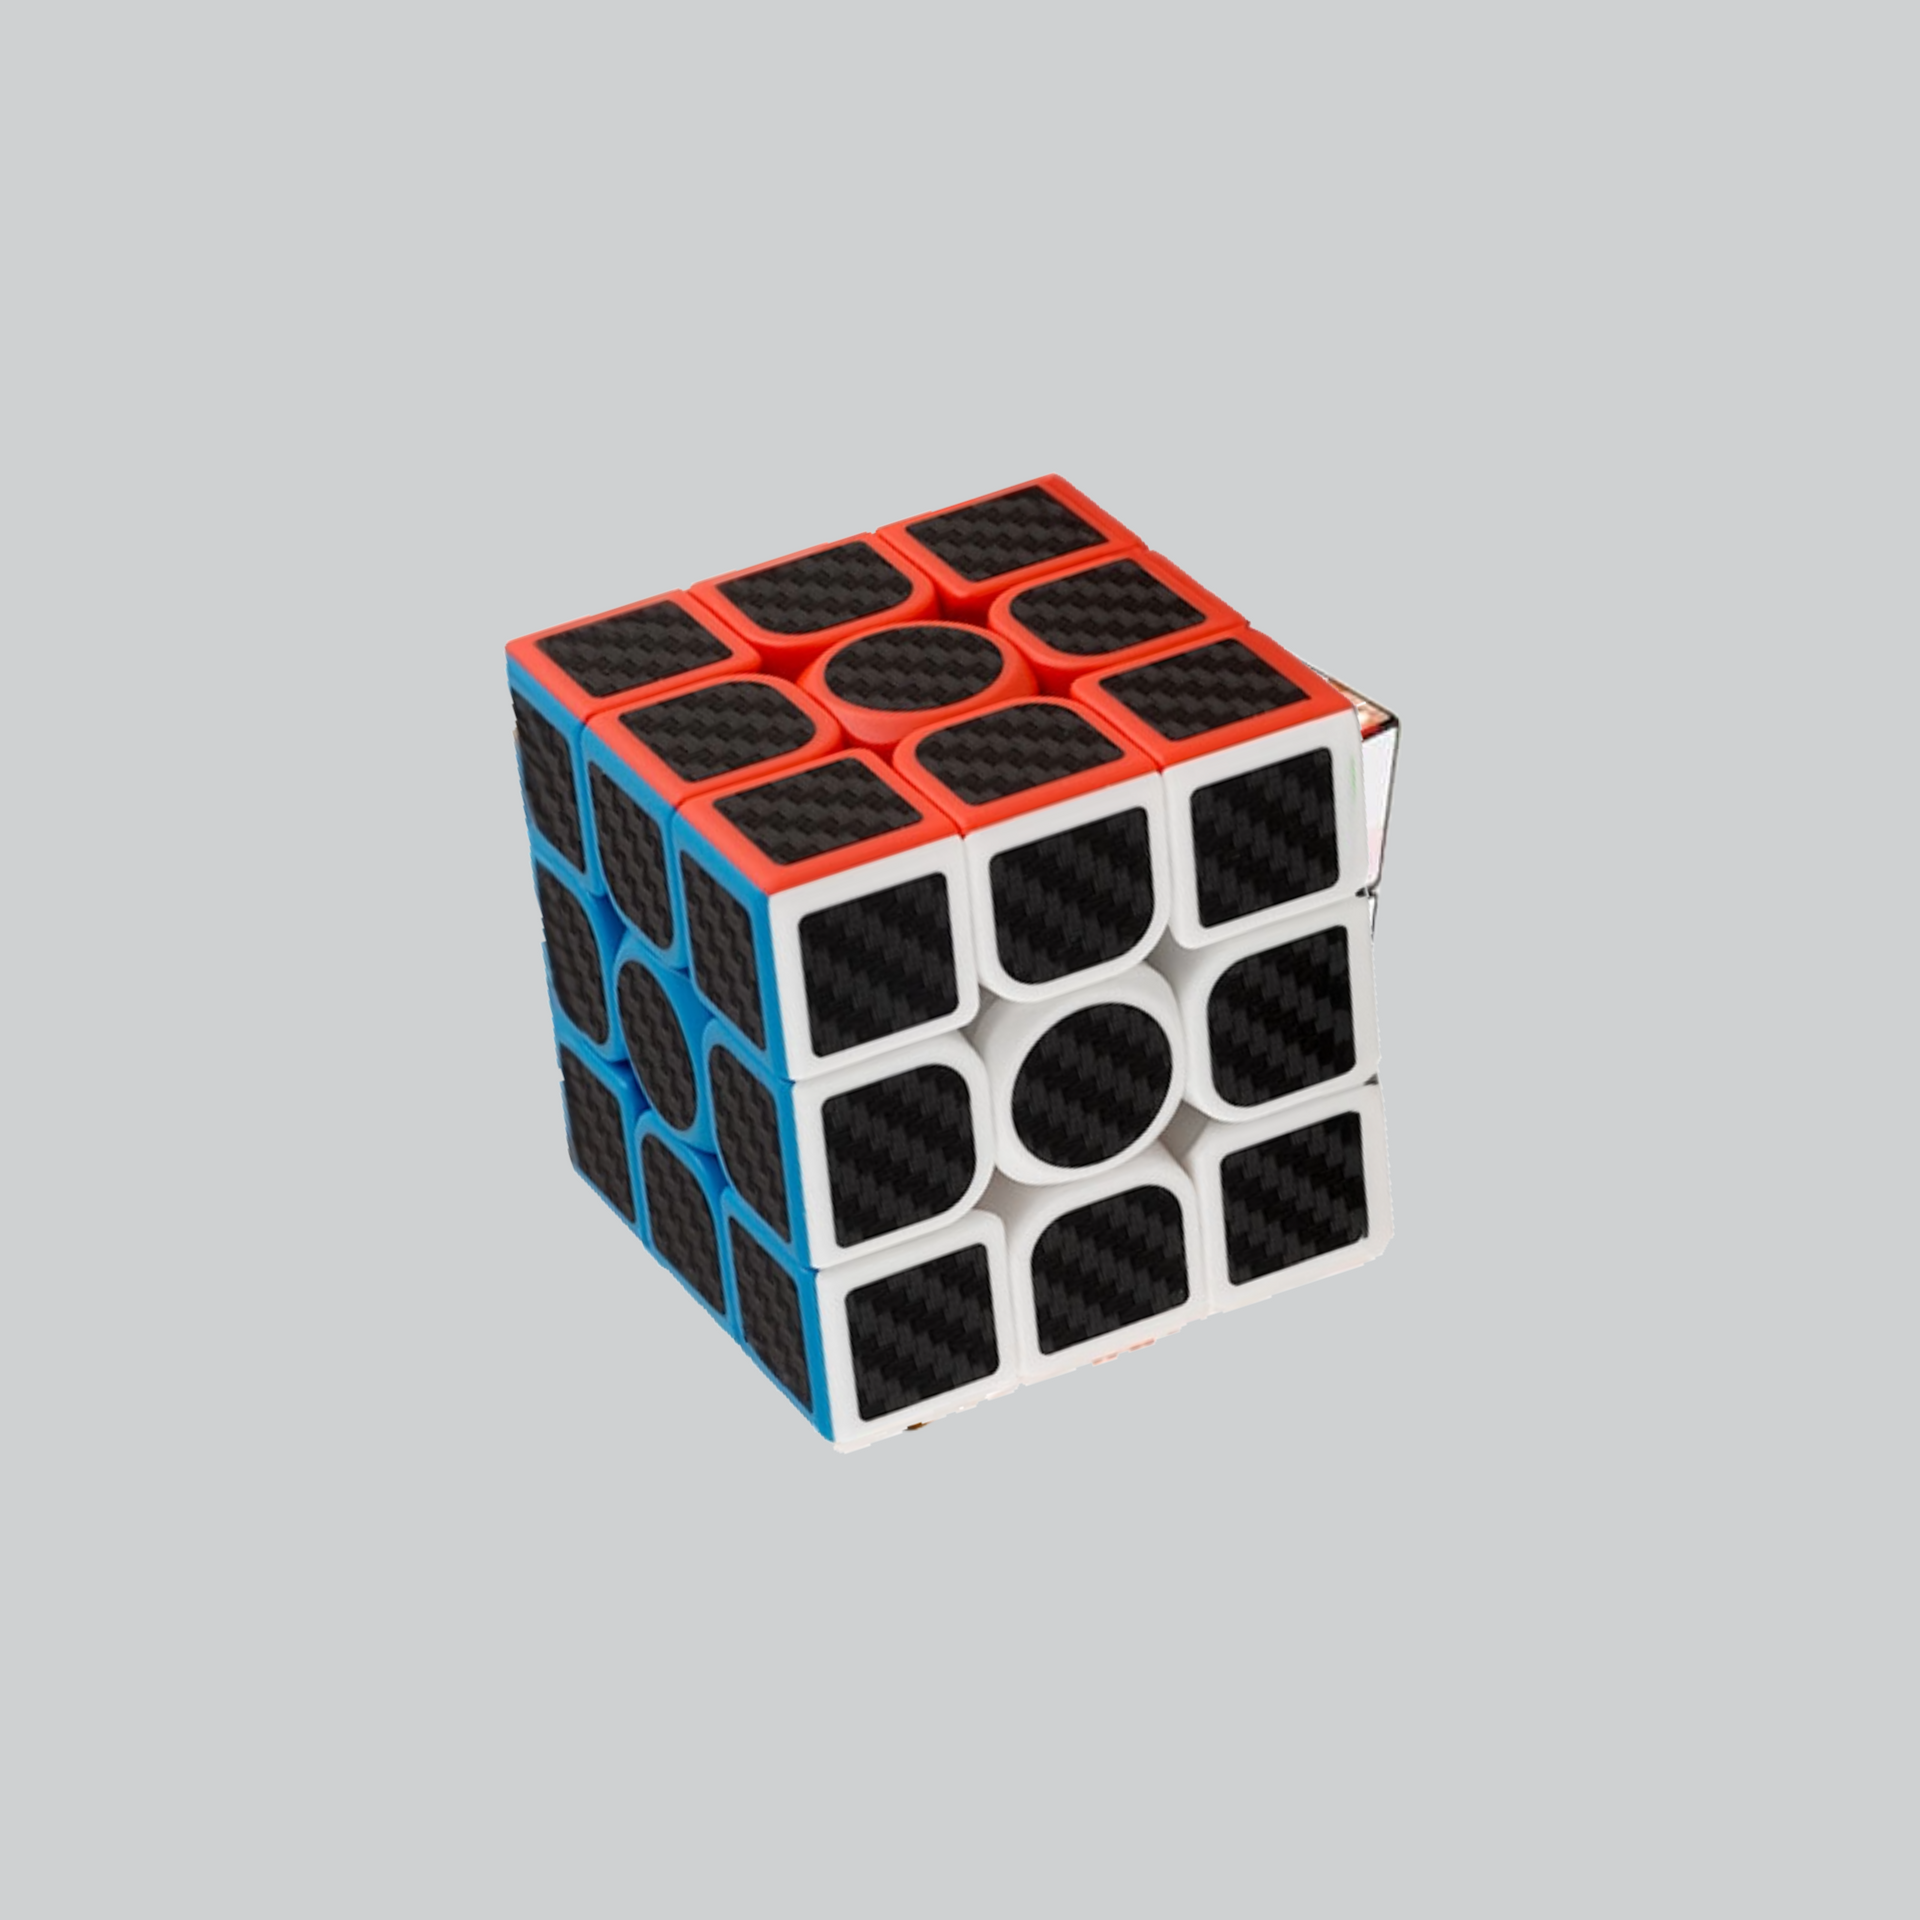 3 BY 3 carbon fiber Rubik's cube